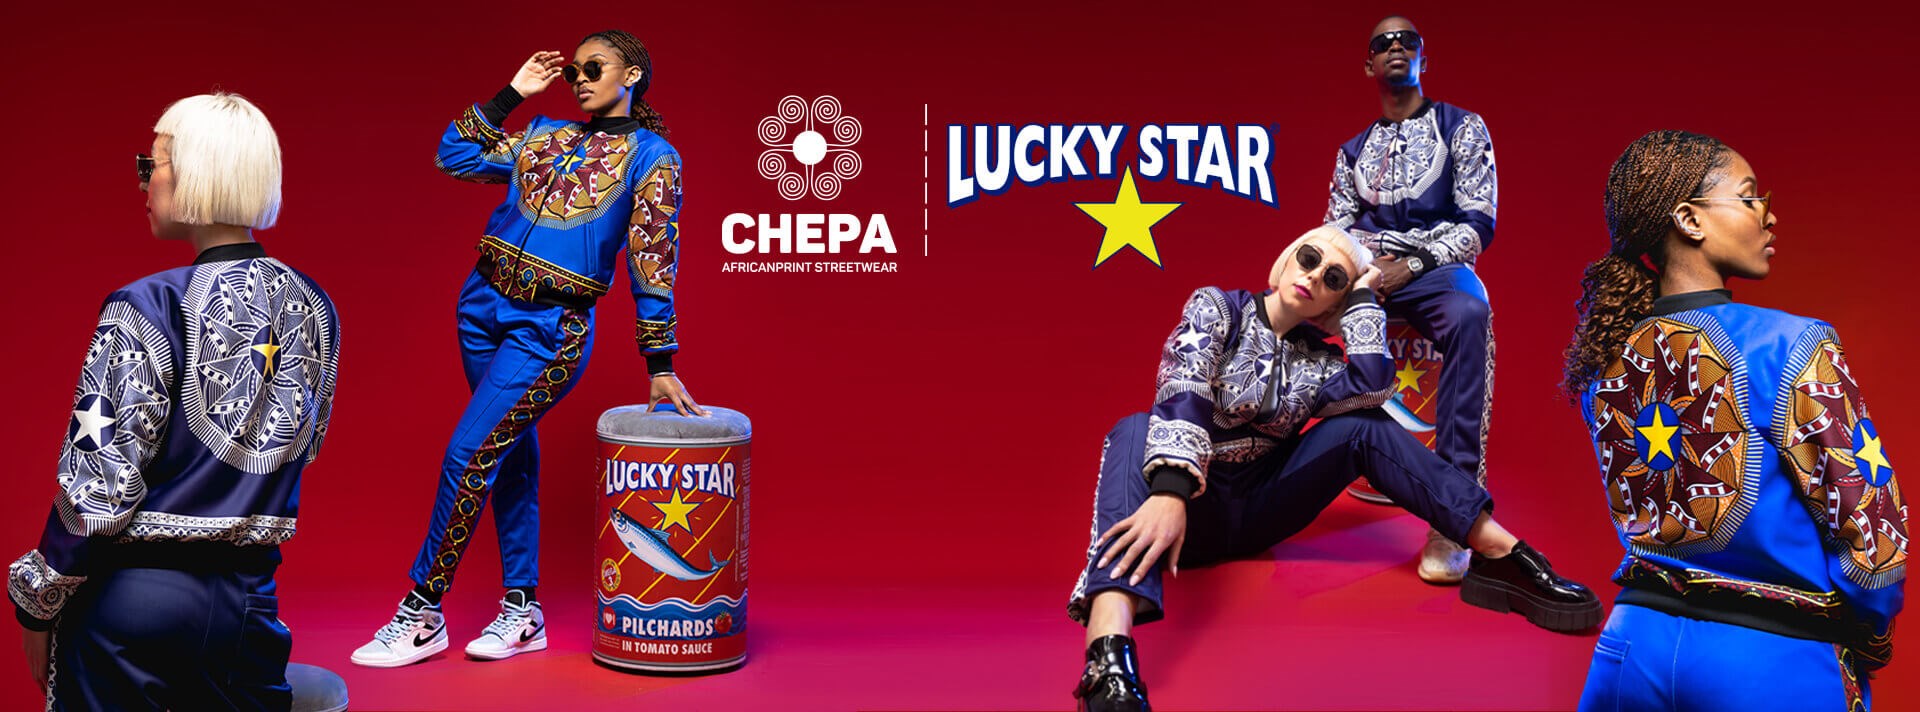 Luck Star Chepa